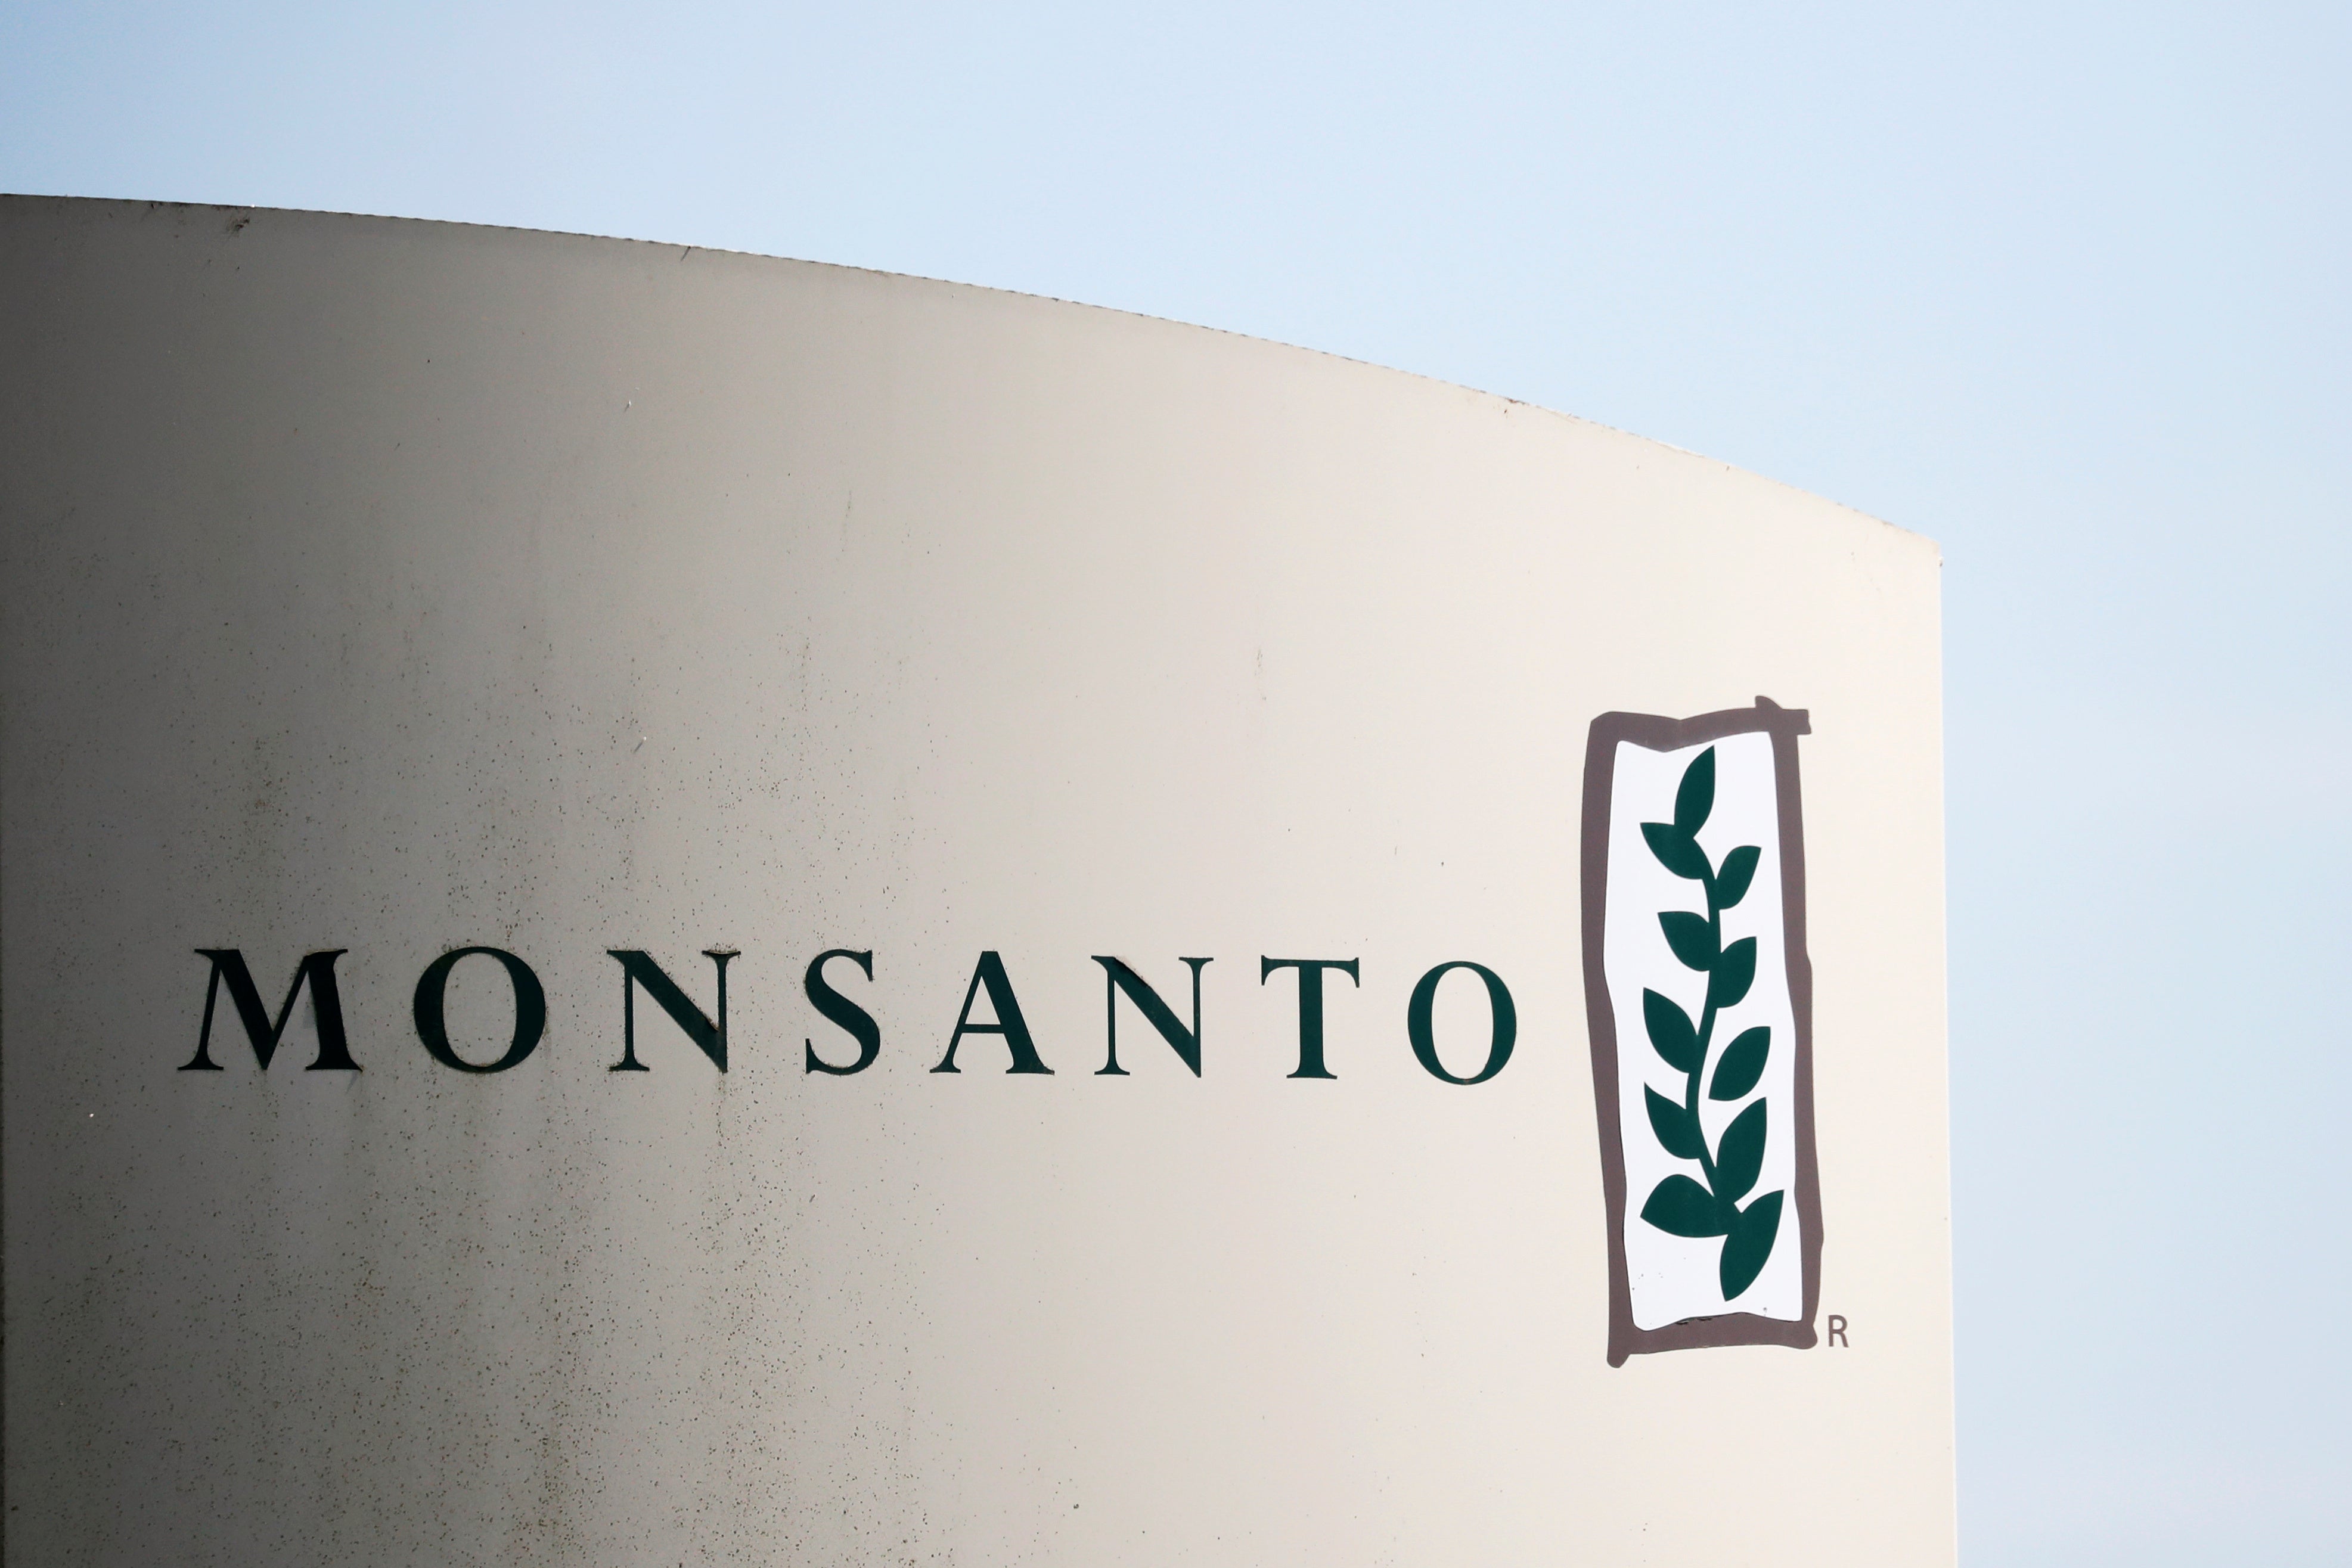 The Monsanto logo